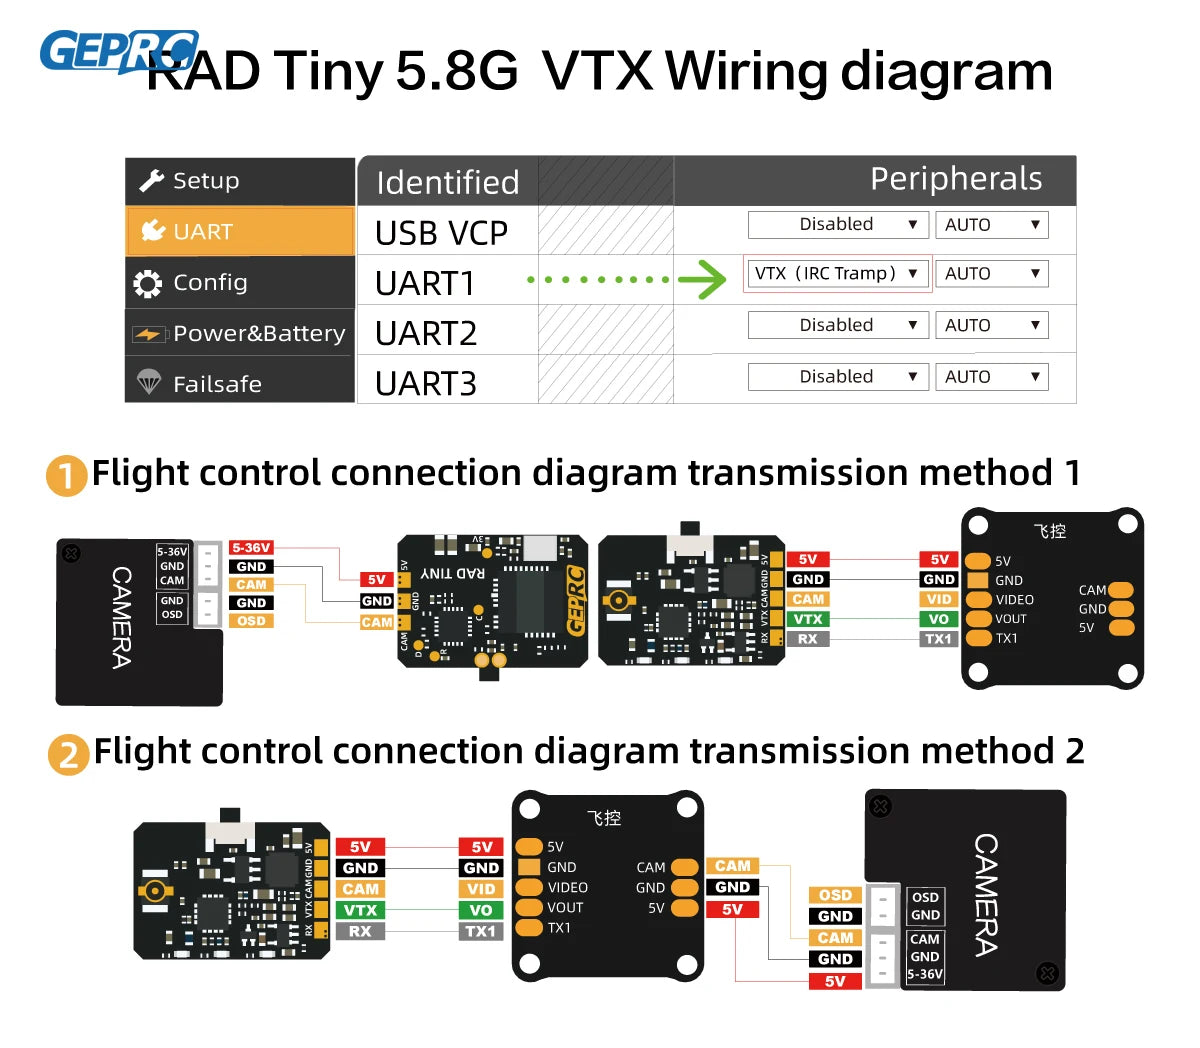 GEPRC RAD Tiny 5.8G 400mW VTX, GEPRAD Tiny 5.8G VTX Wiring diagram Setup Identified